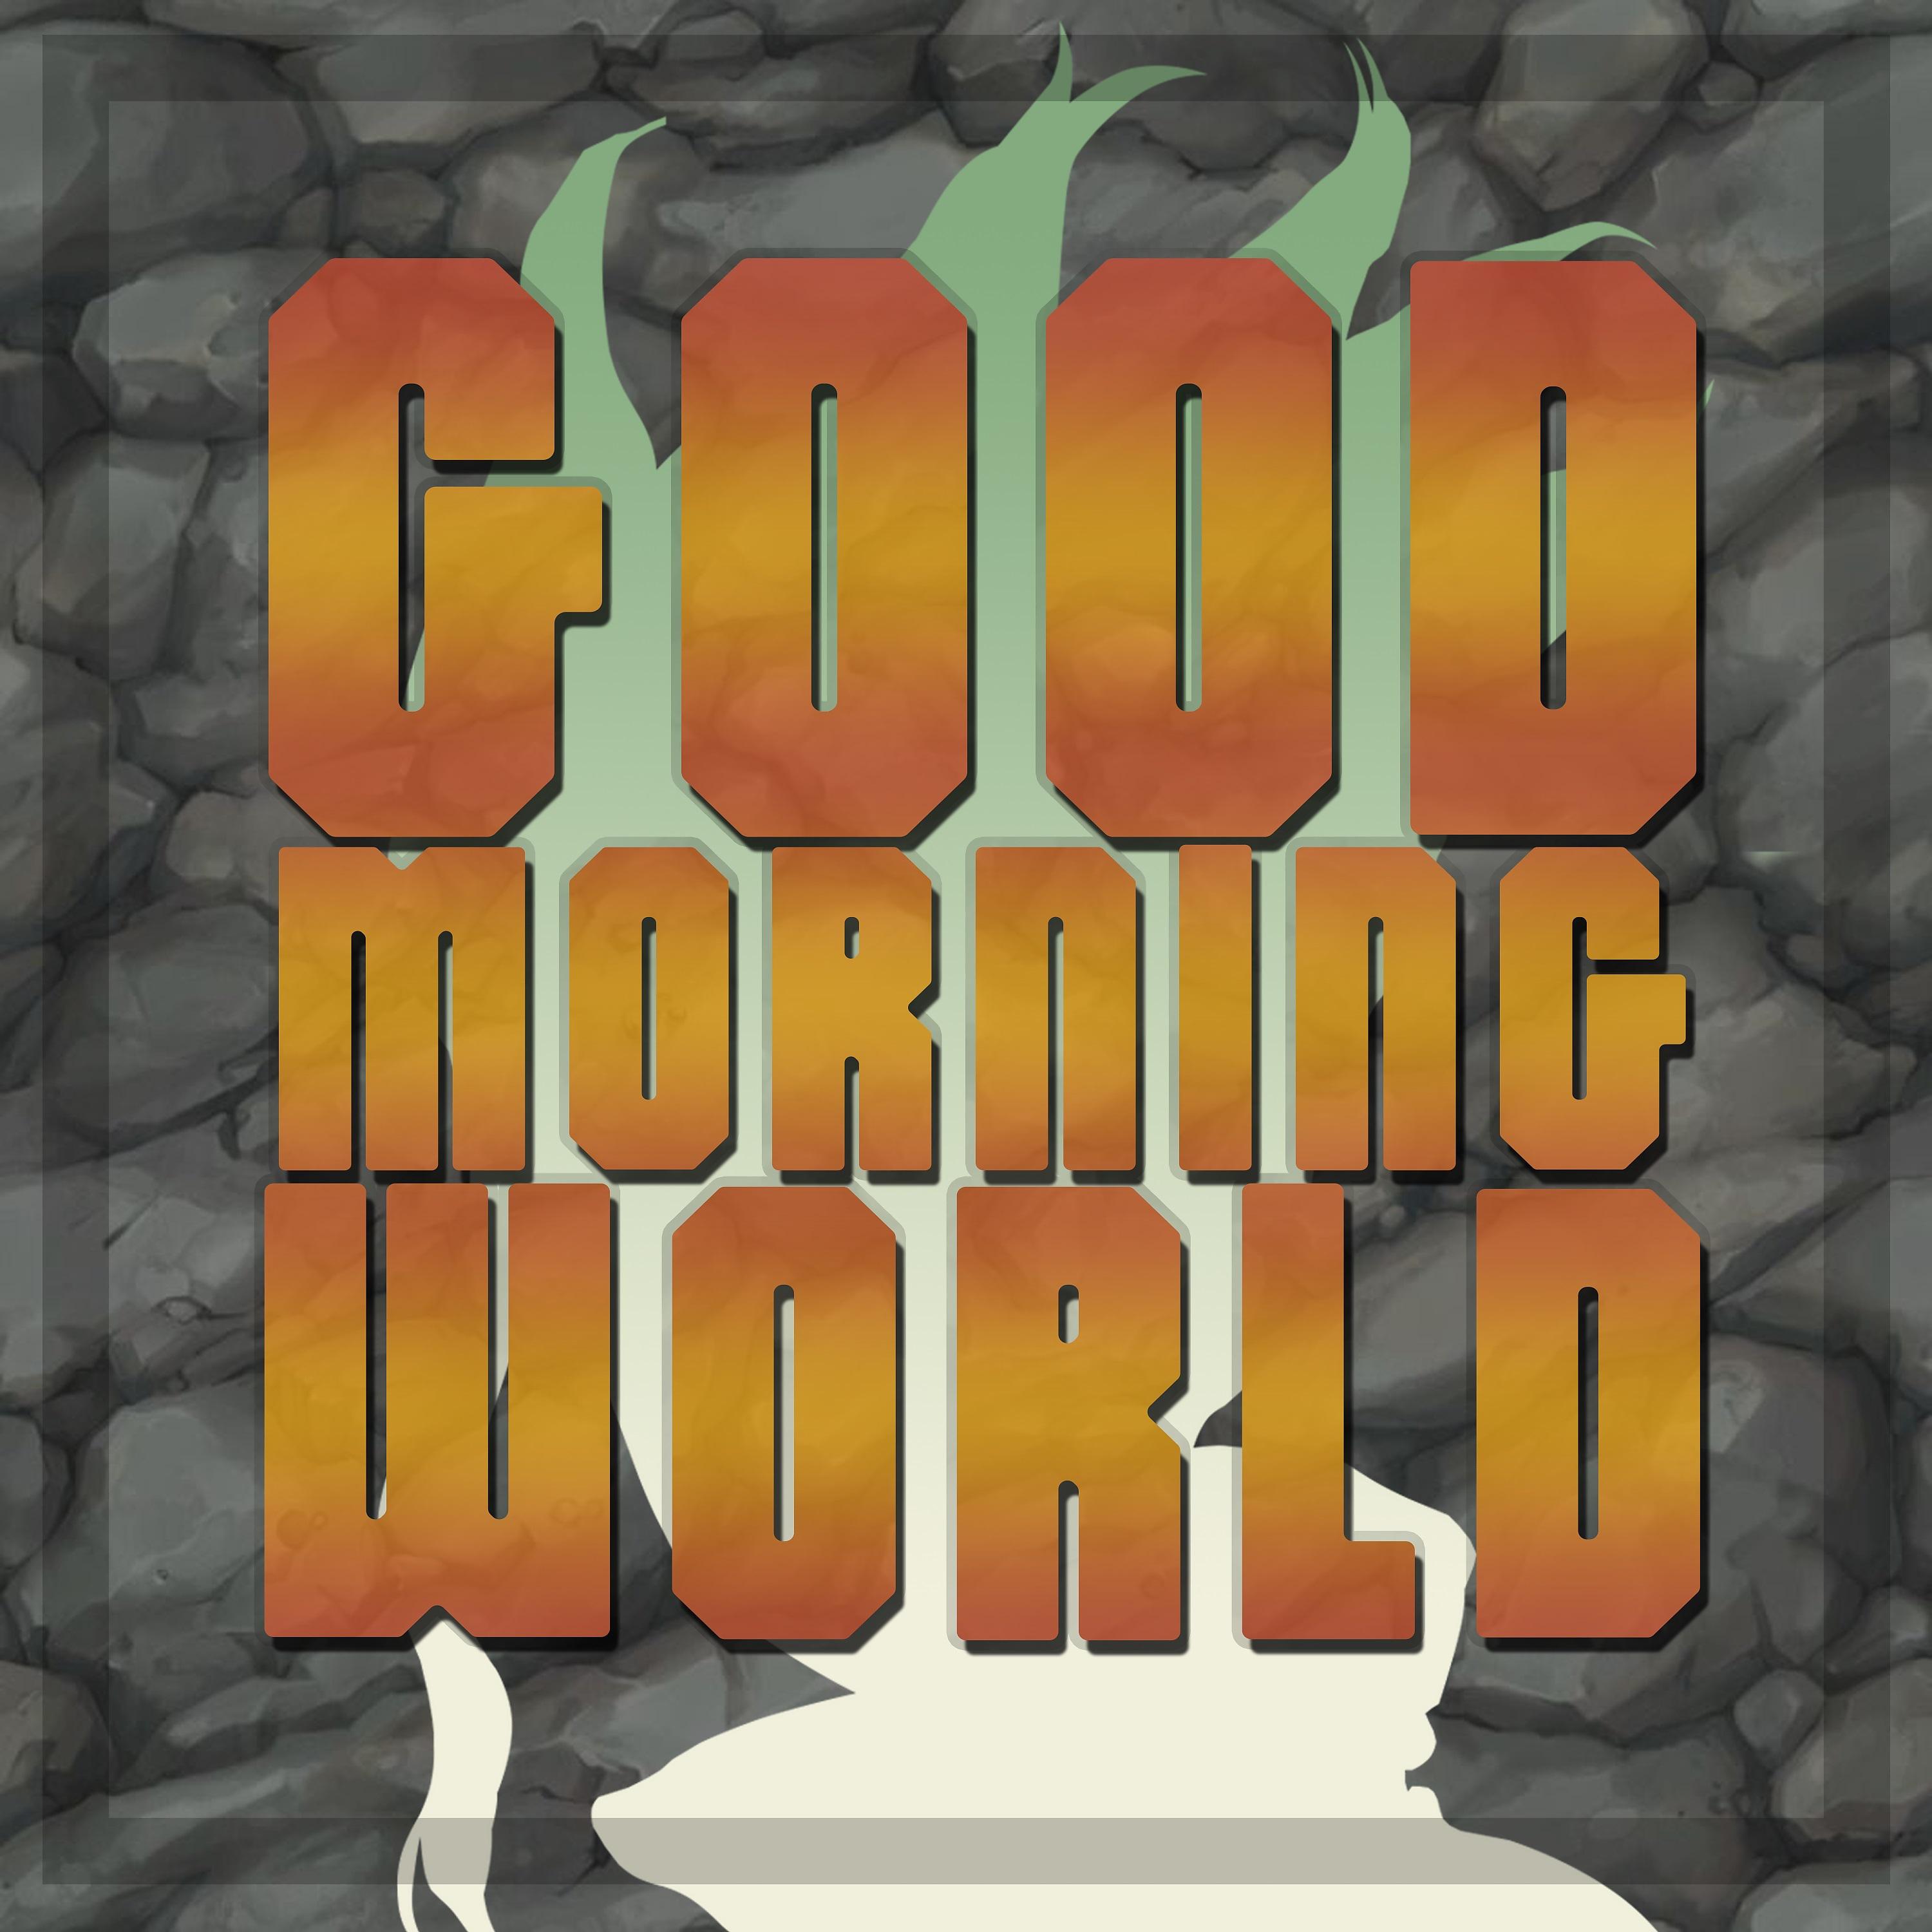 Постер альбома Good Morning World